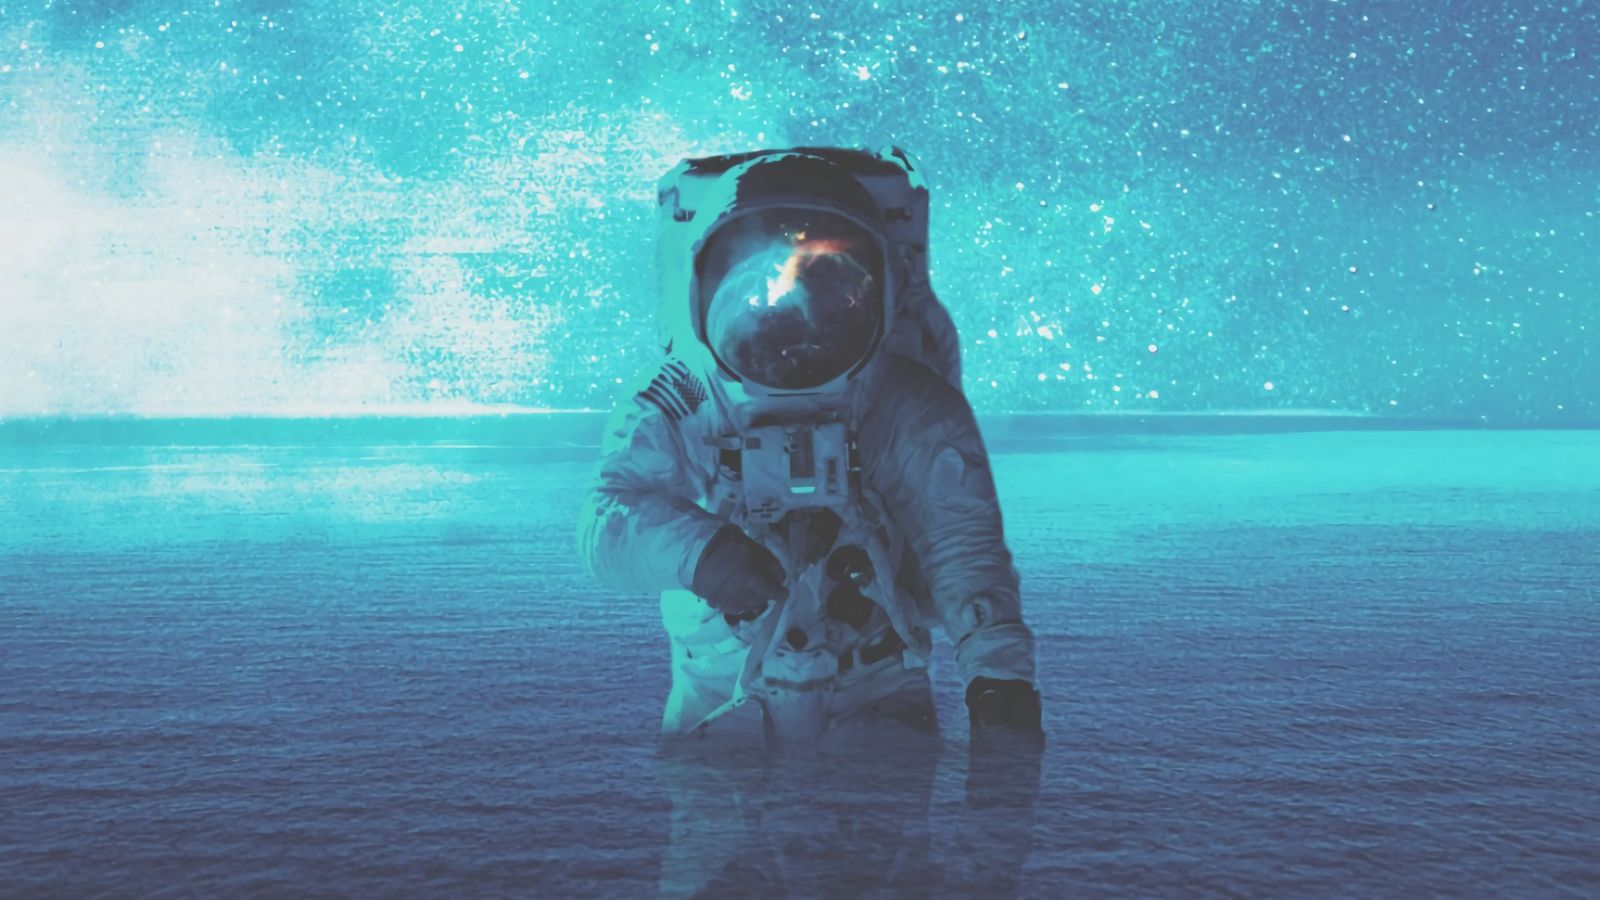 Download wallpaper 1600x900 astronaut, water, space, stars widescreen